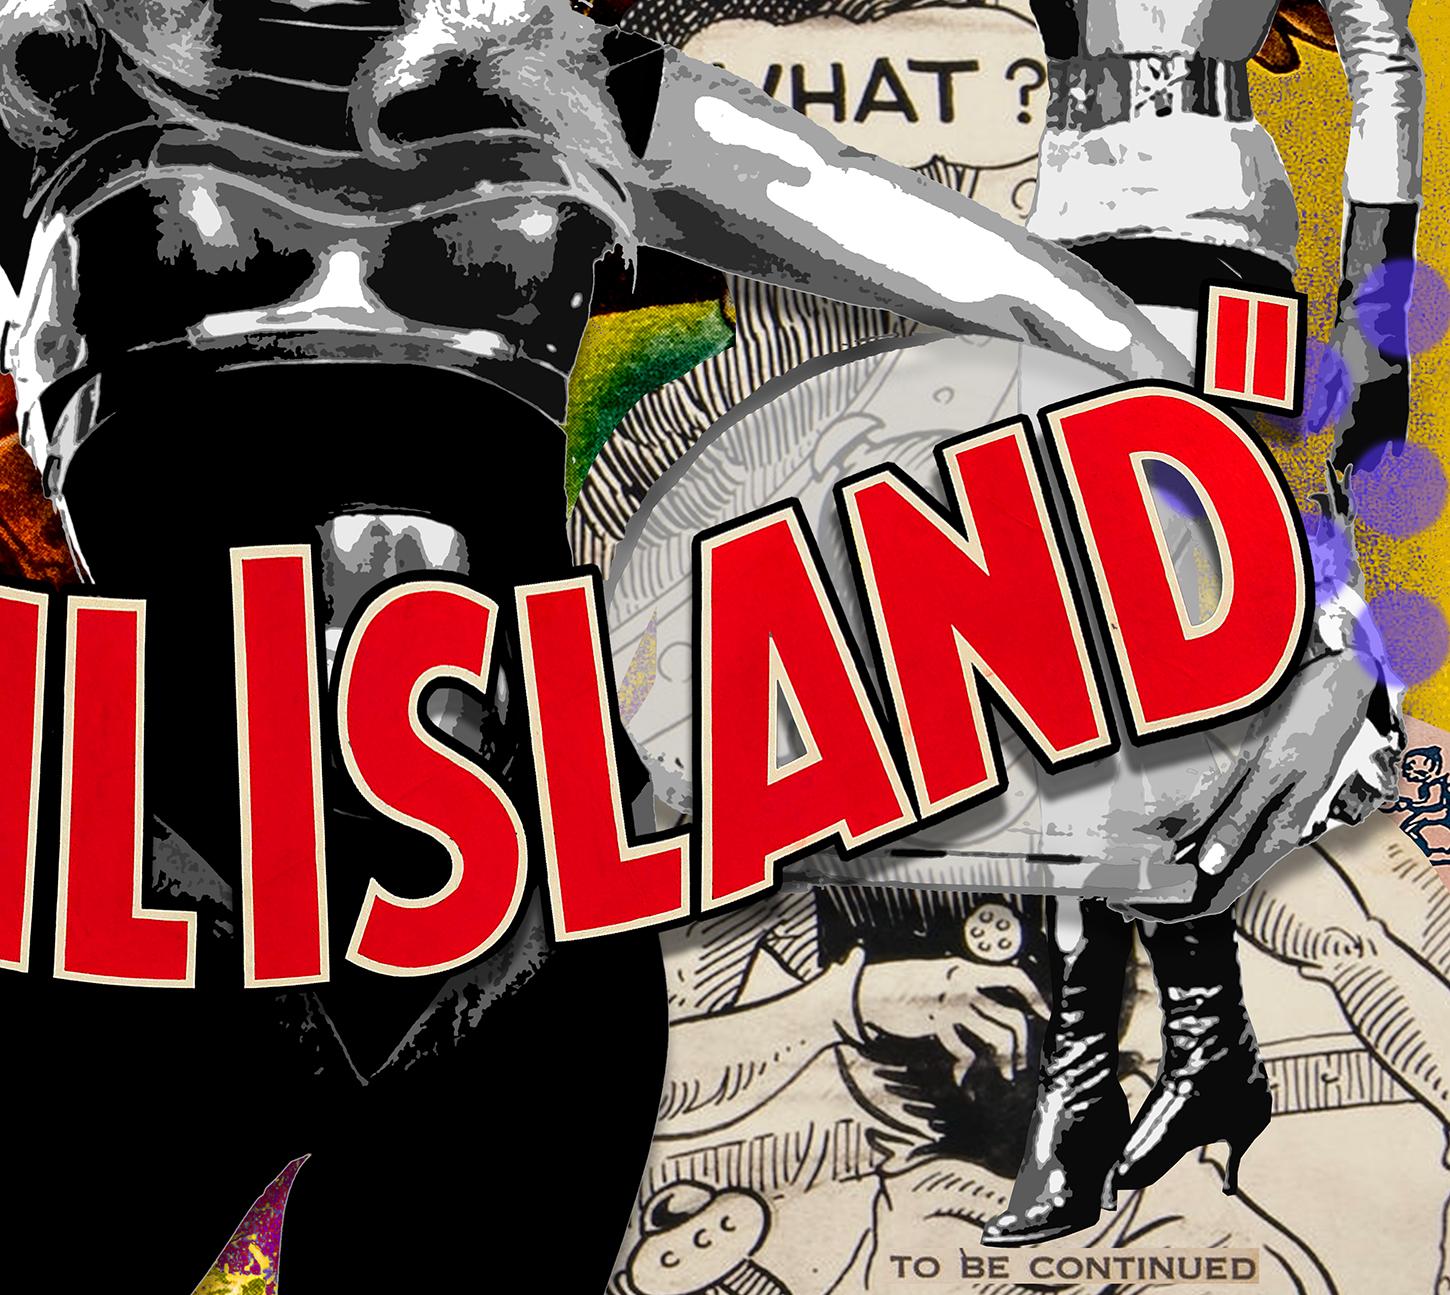 She Devil Island, 31x39 framed, Sci Fi mixed Media image with hand work - Pop Art Mixed Media Art by Ceravolo